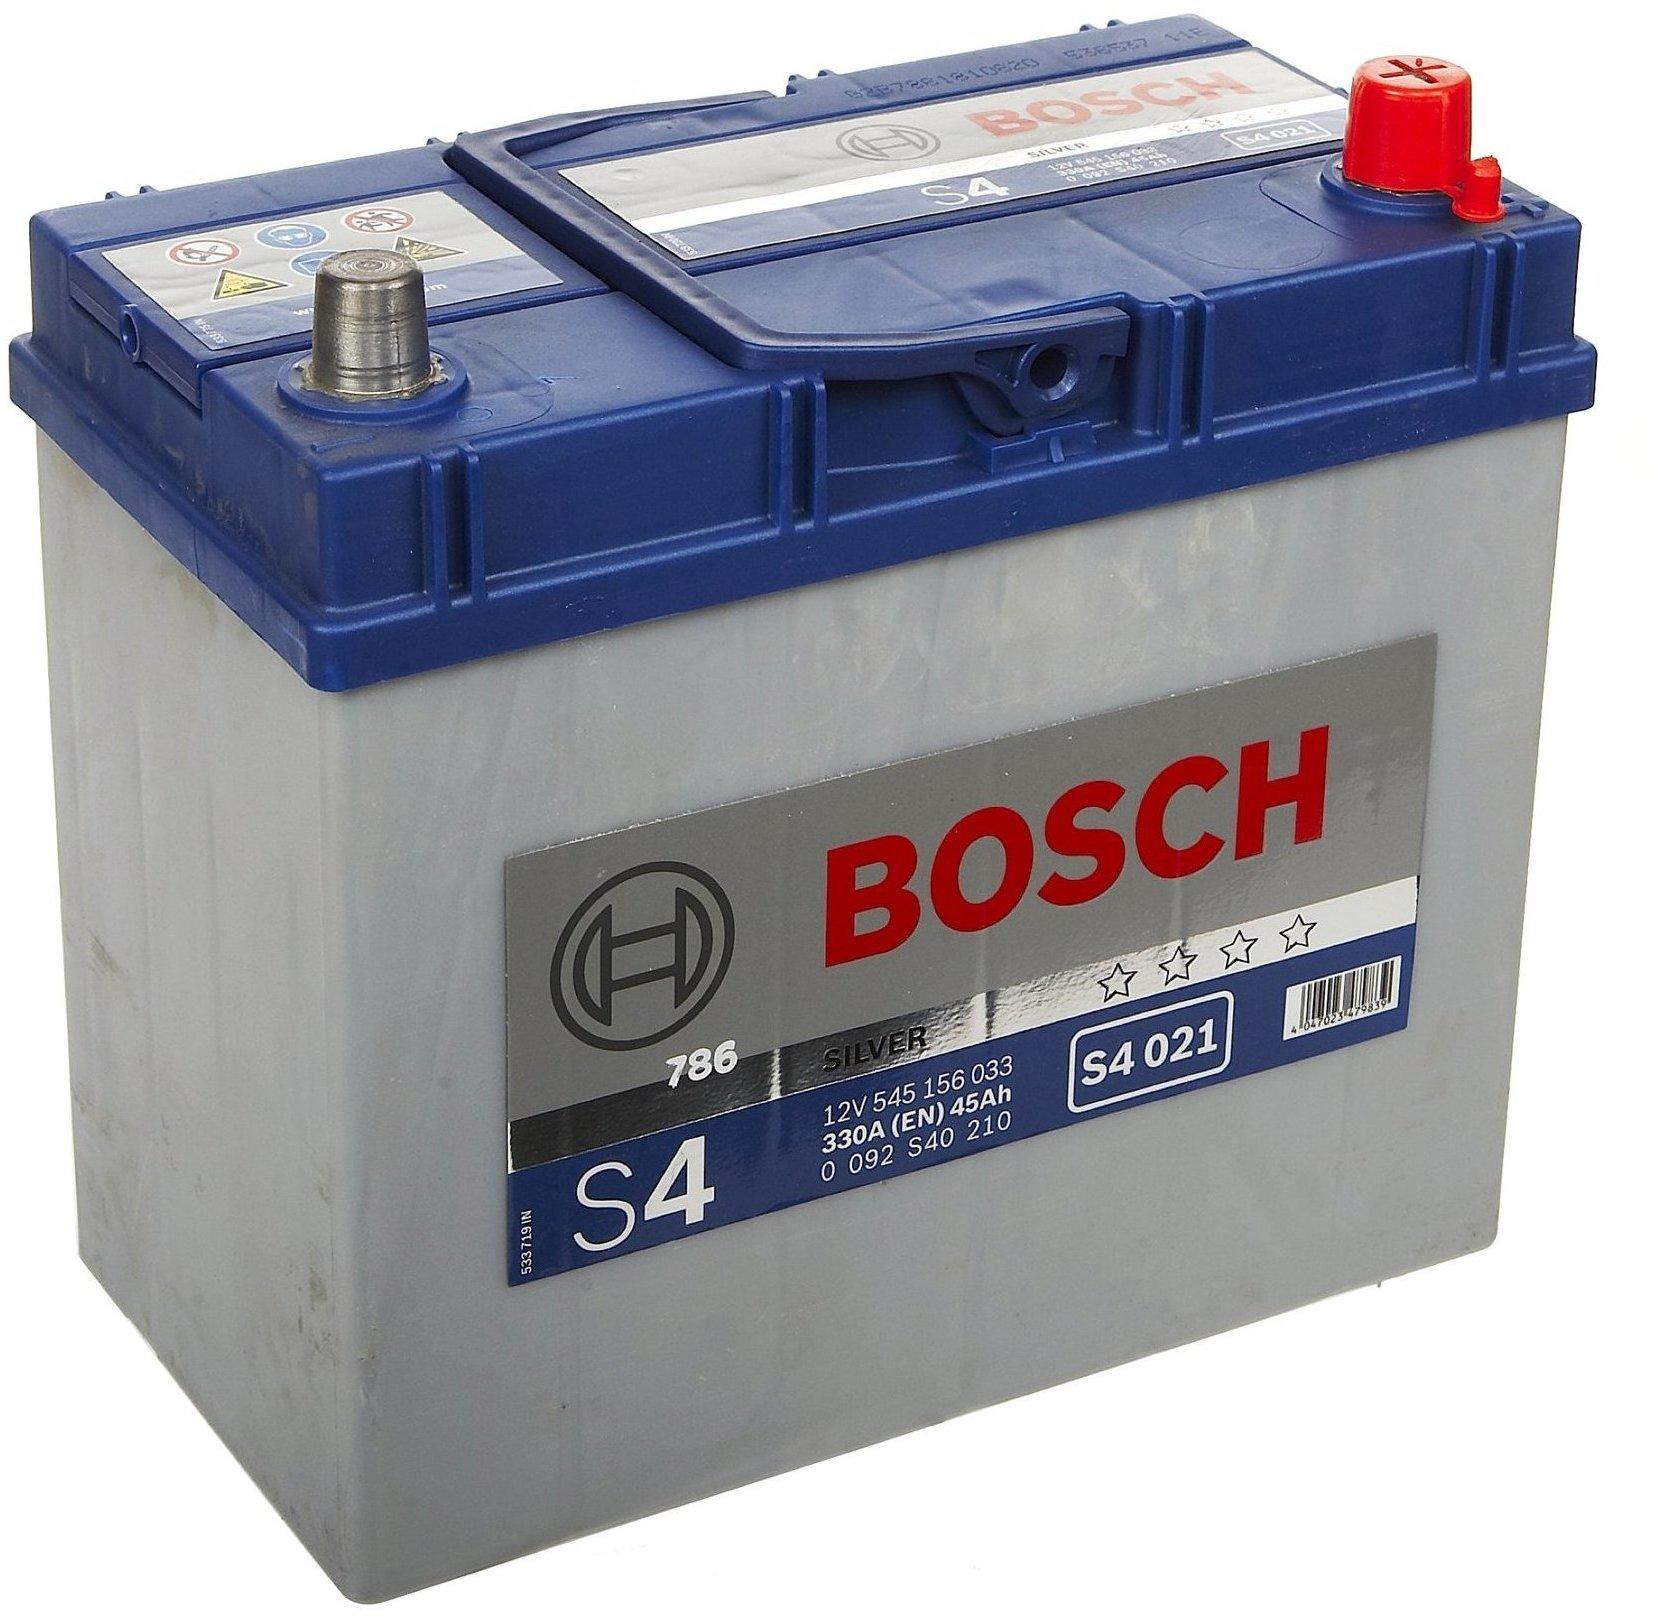 Bosch S4 12V 45Ah (0 092 S40 210) Test TOP Angebote ab 76,99